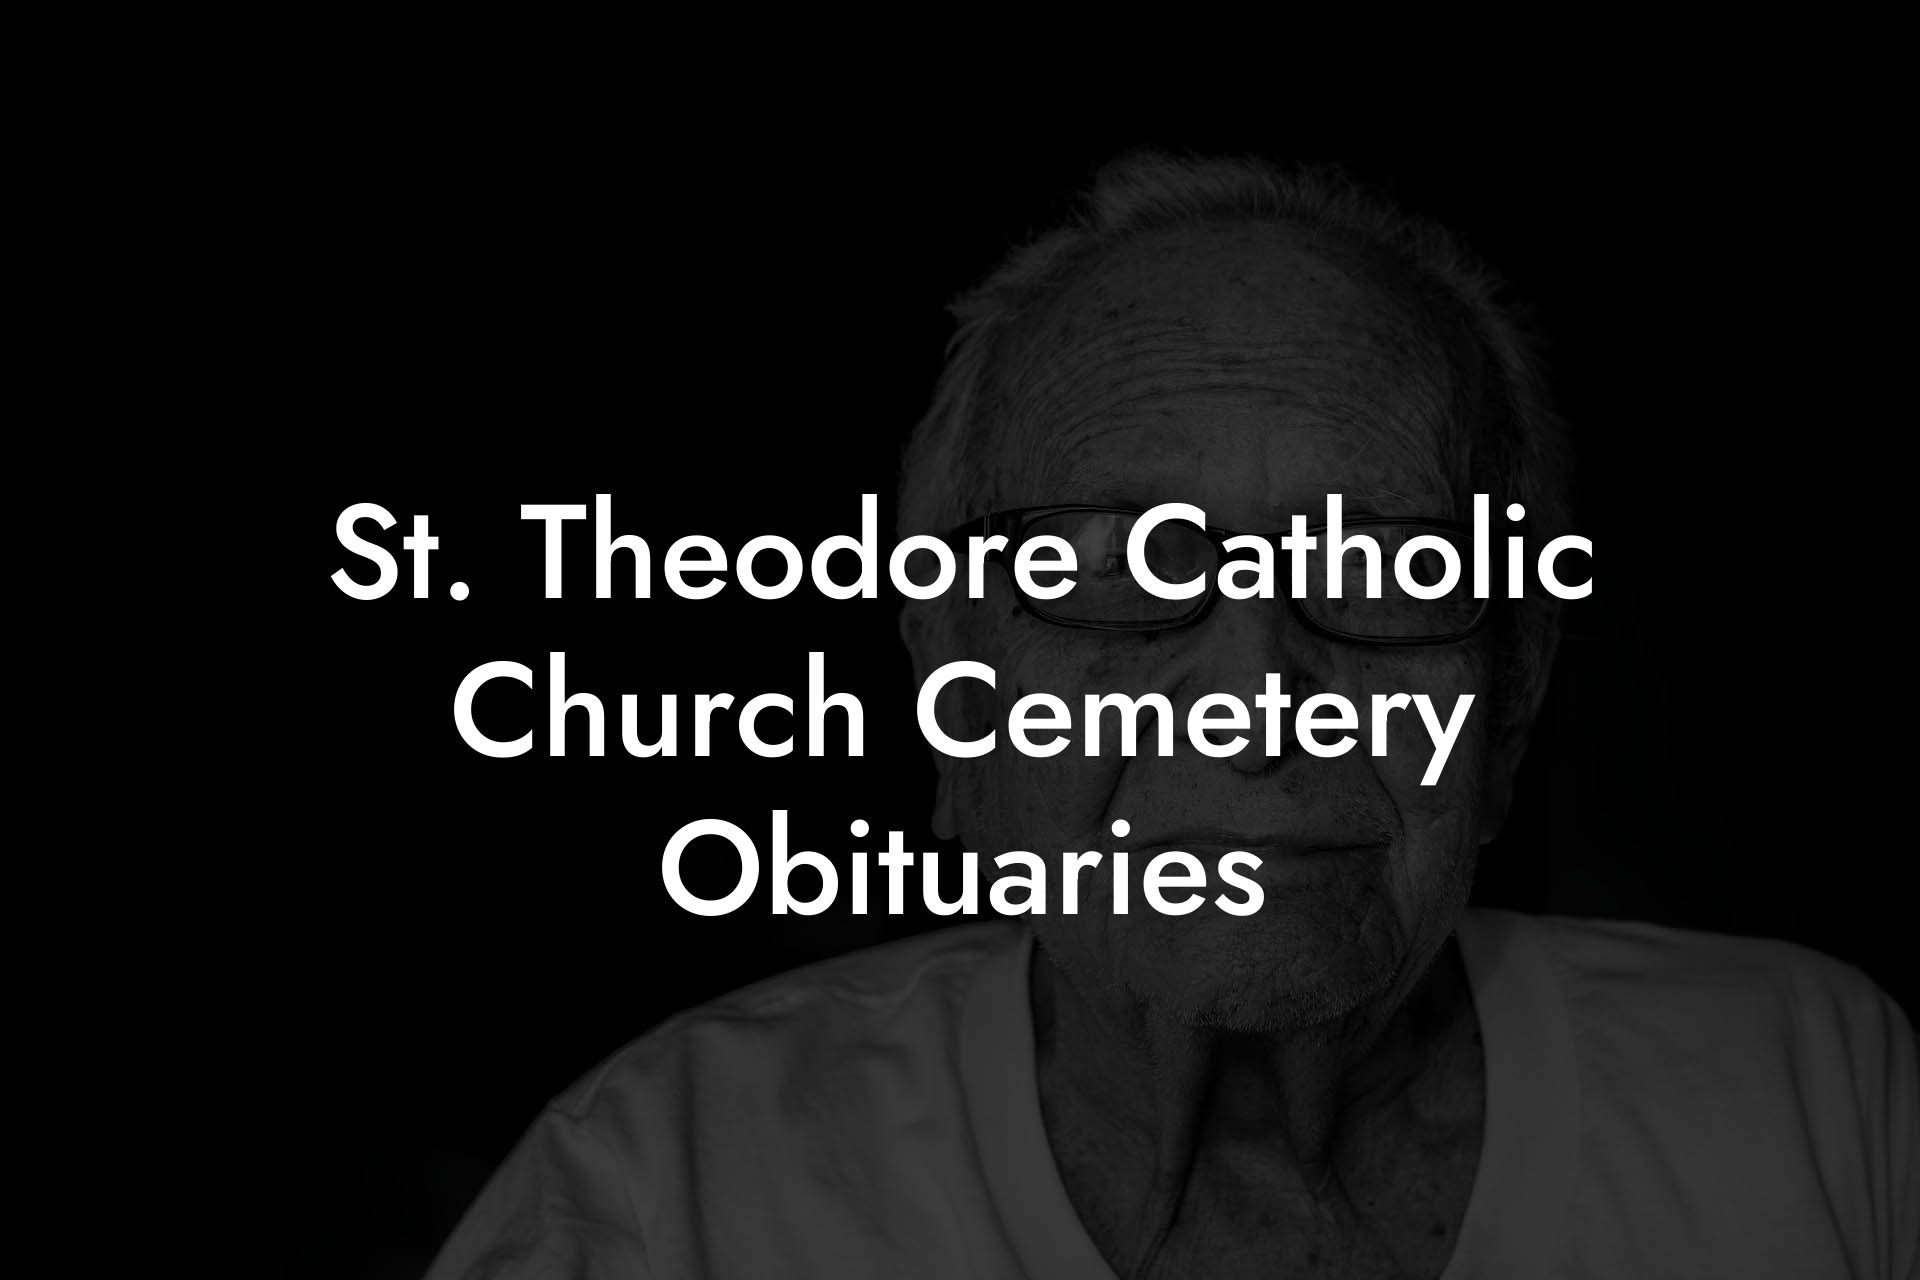 St. Theodore Catholic Church Cemetery Obituaries